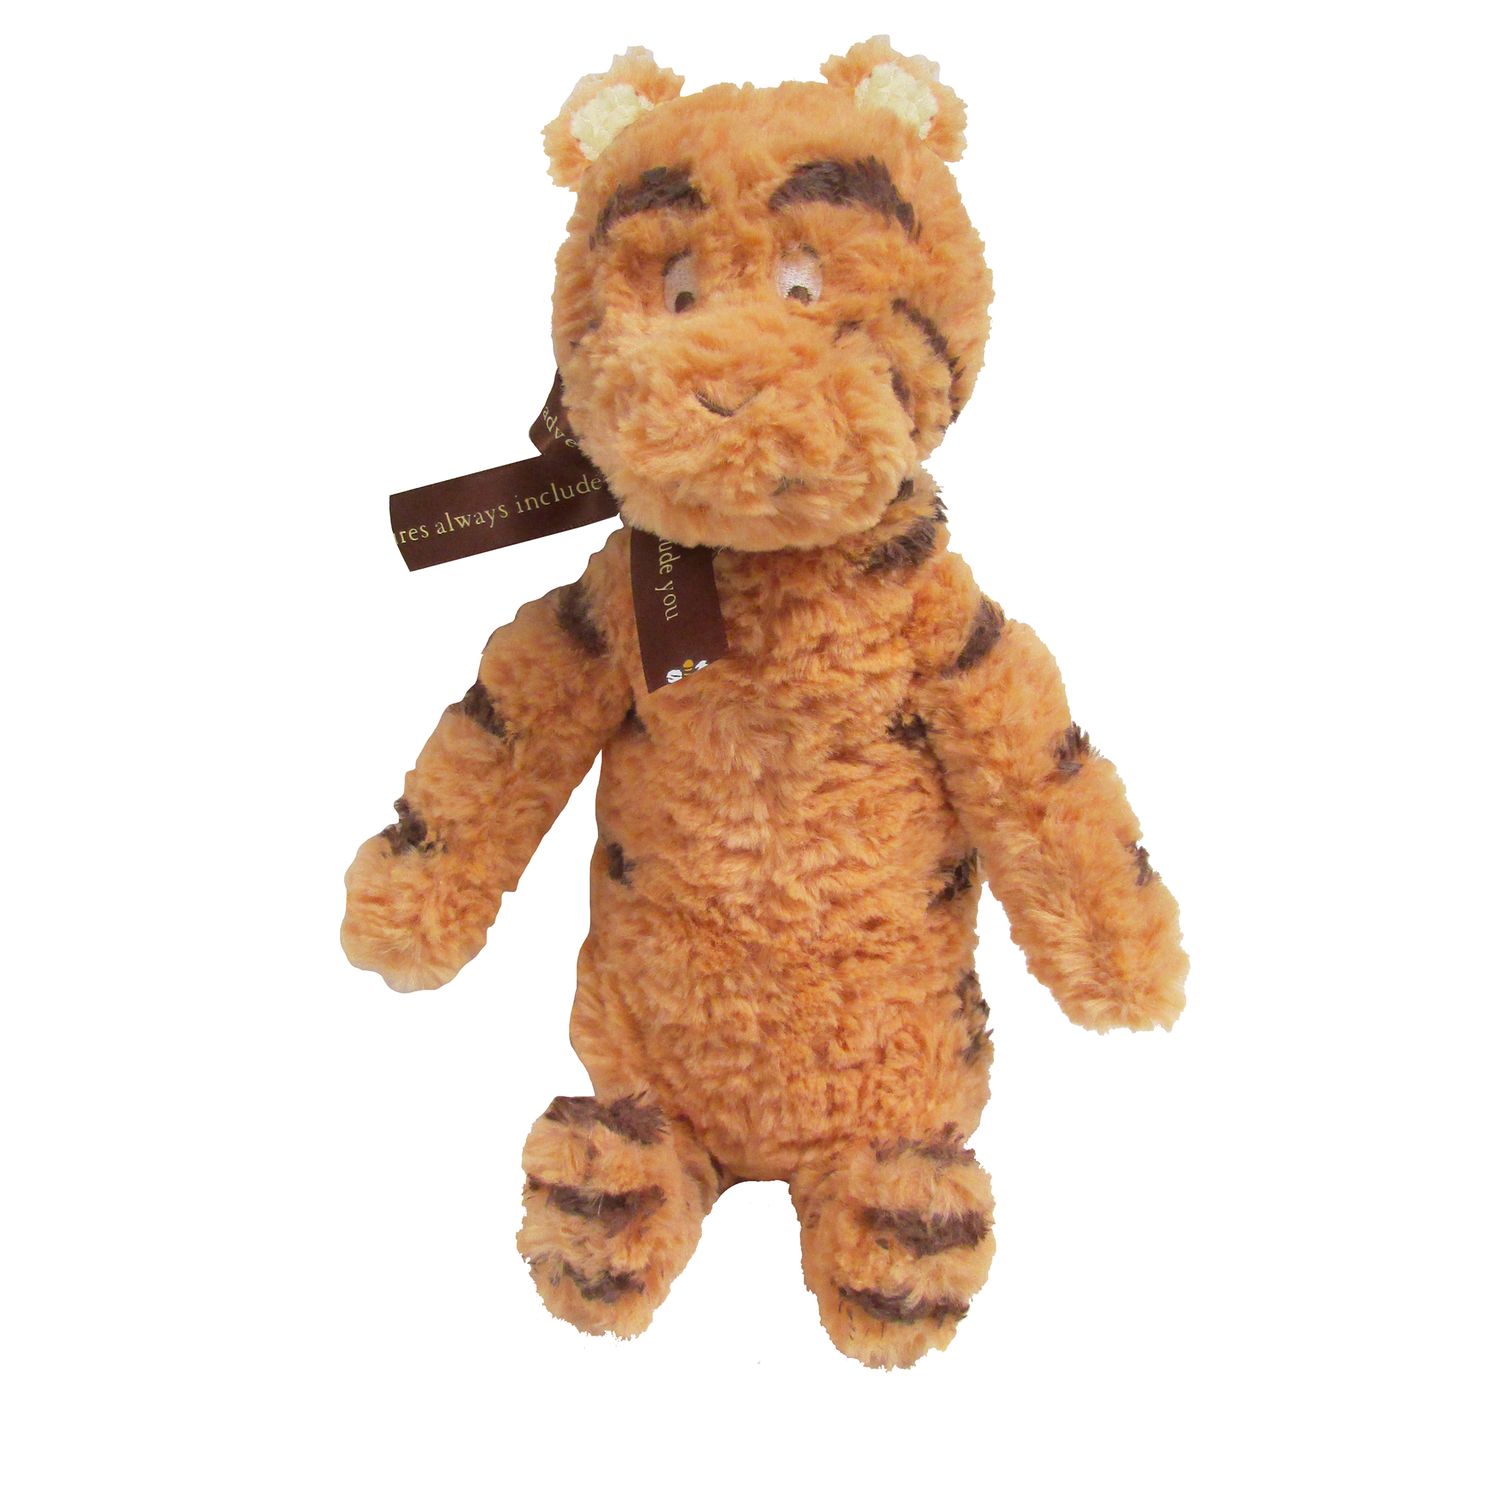 tigger from winnie the pooh stuffed animal